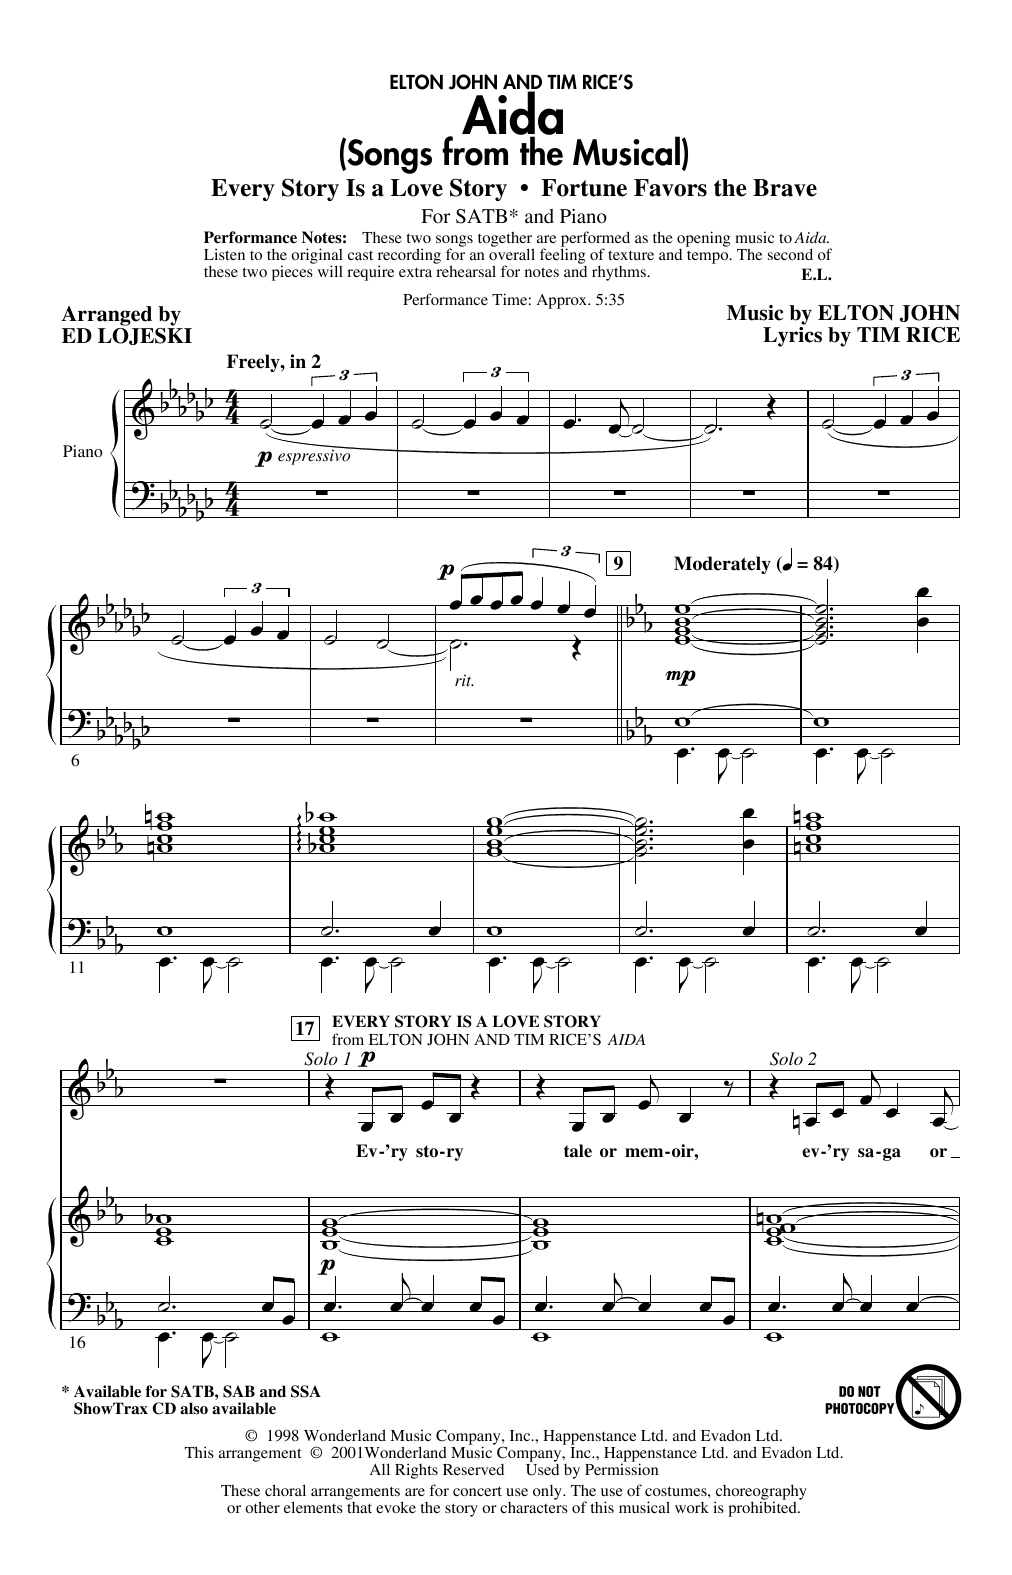 Elton John & Tim Rice Aida (Songs from the Musical) (arr. Ed Lojeski) sheet music notes and chords arranged for SAB Choir